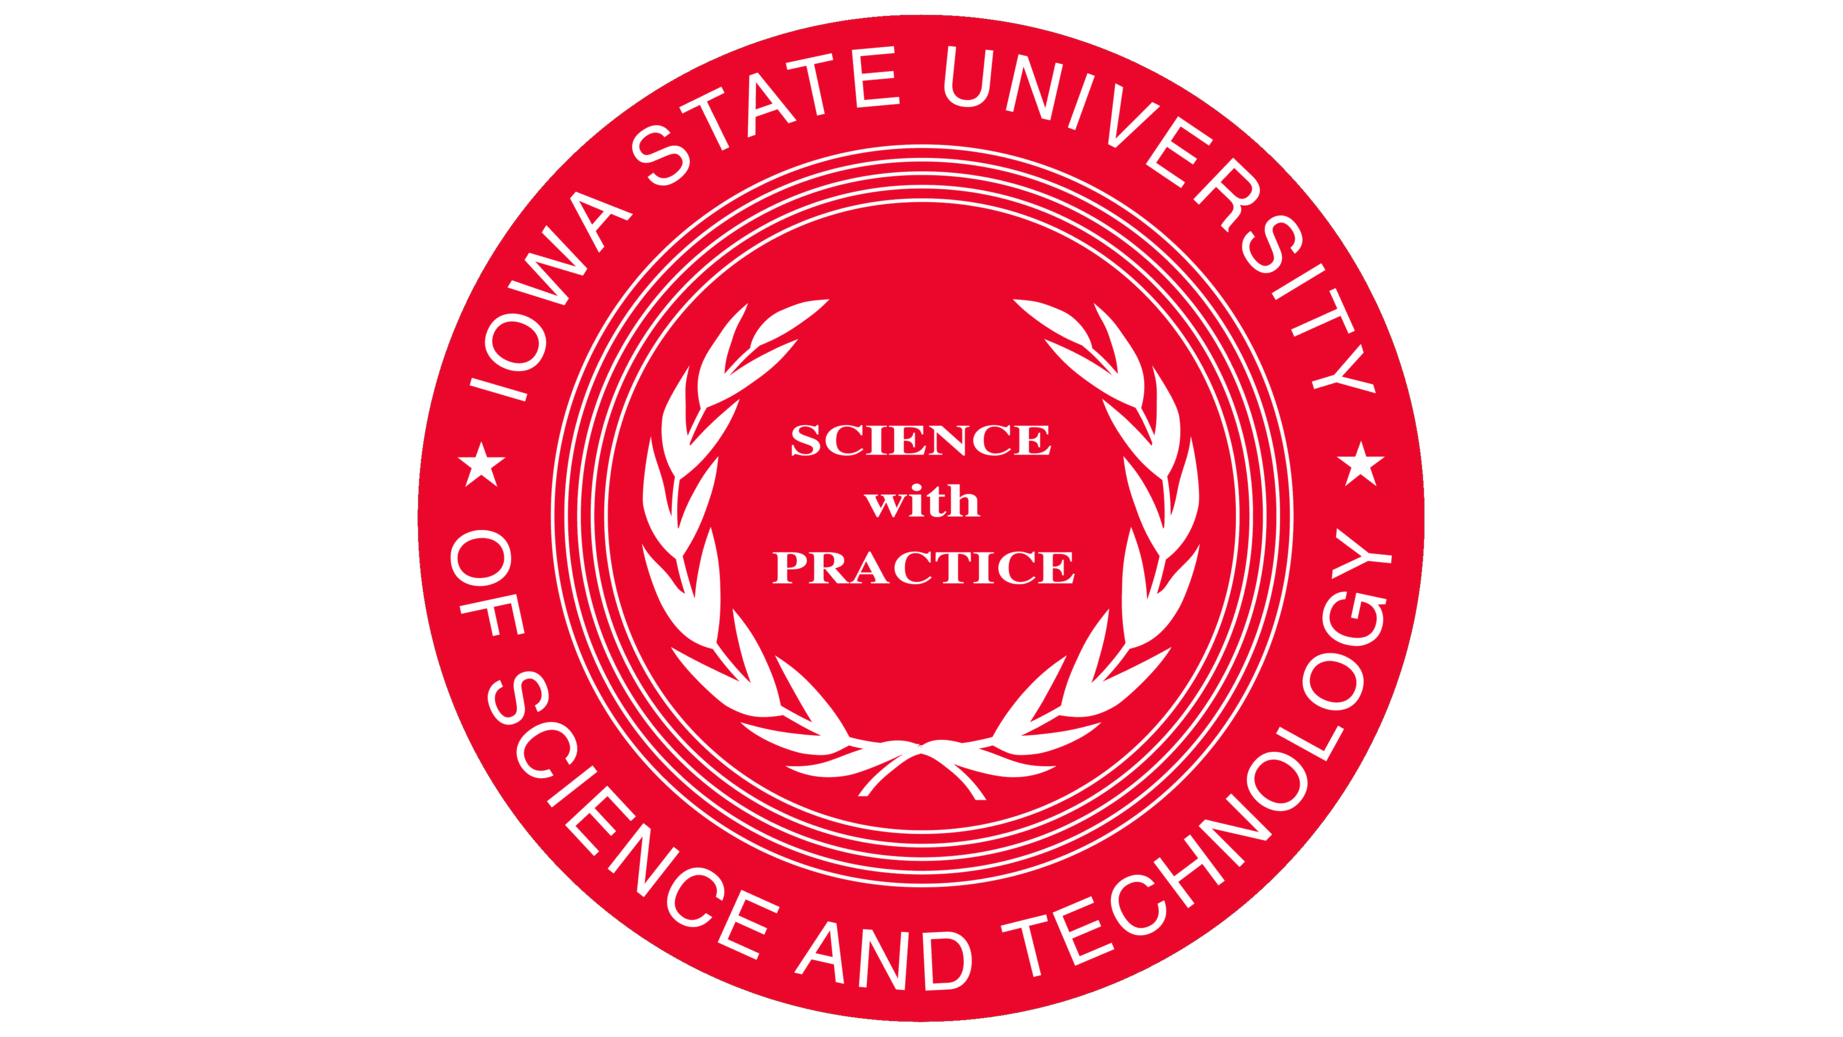 Iowa state university seal sign